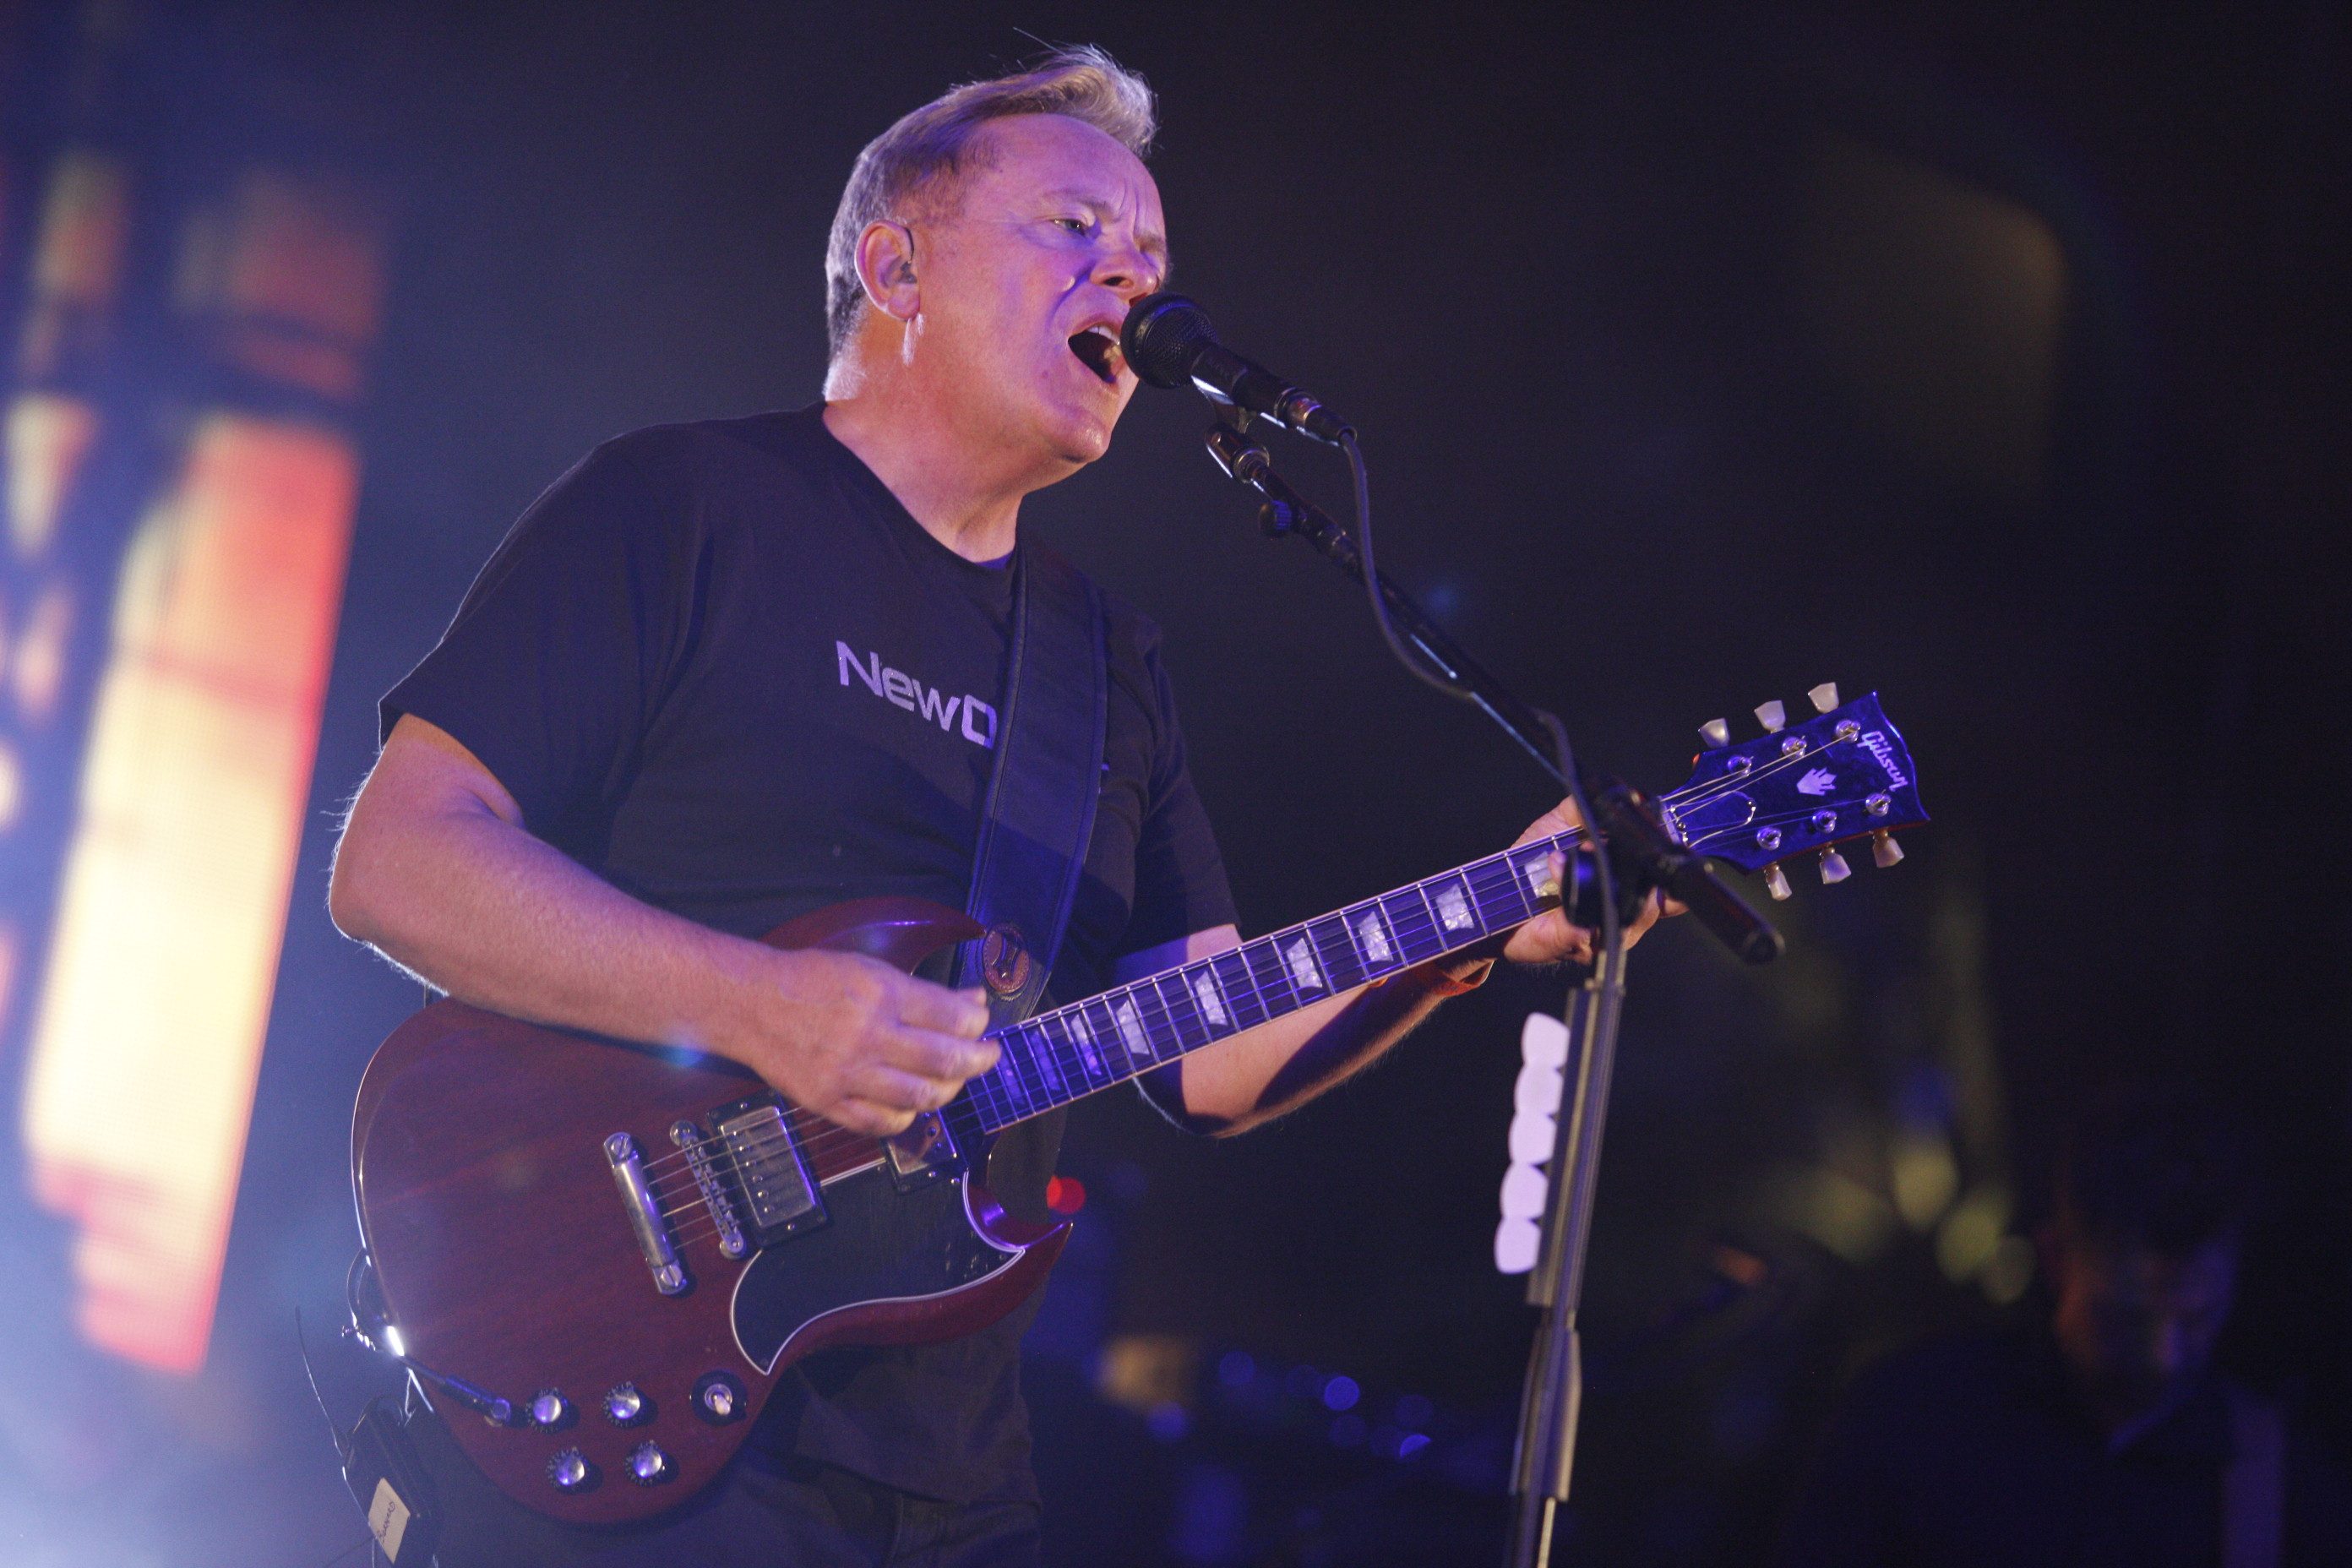 New Order Announce New Album Music Complete For September 2015 Release